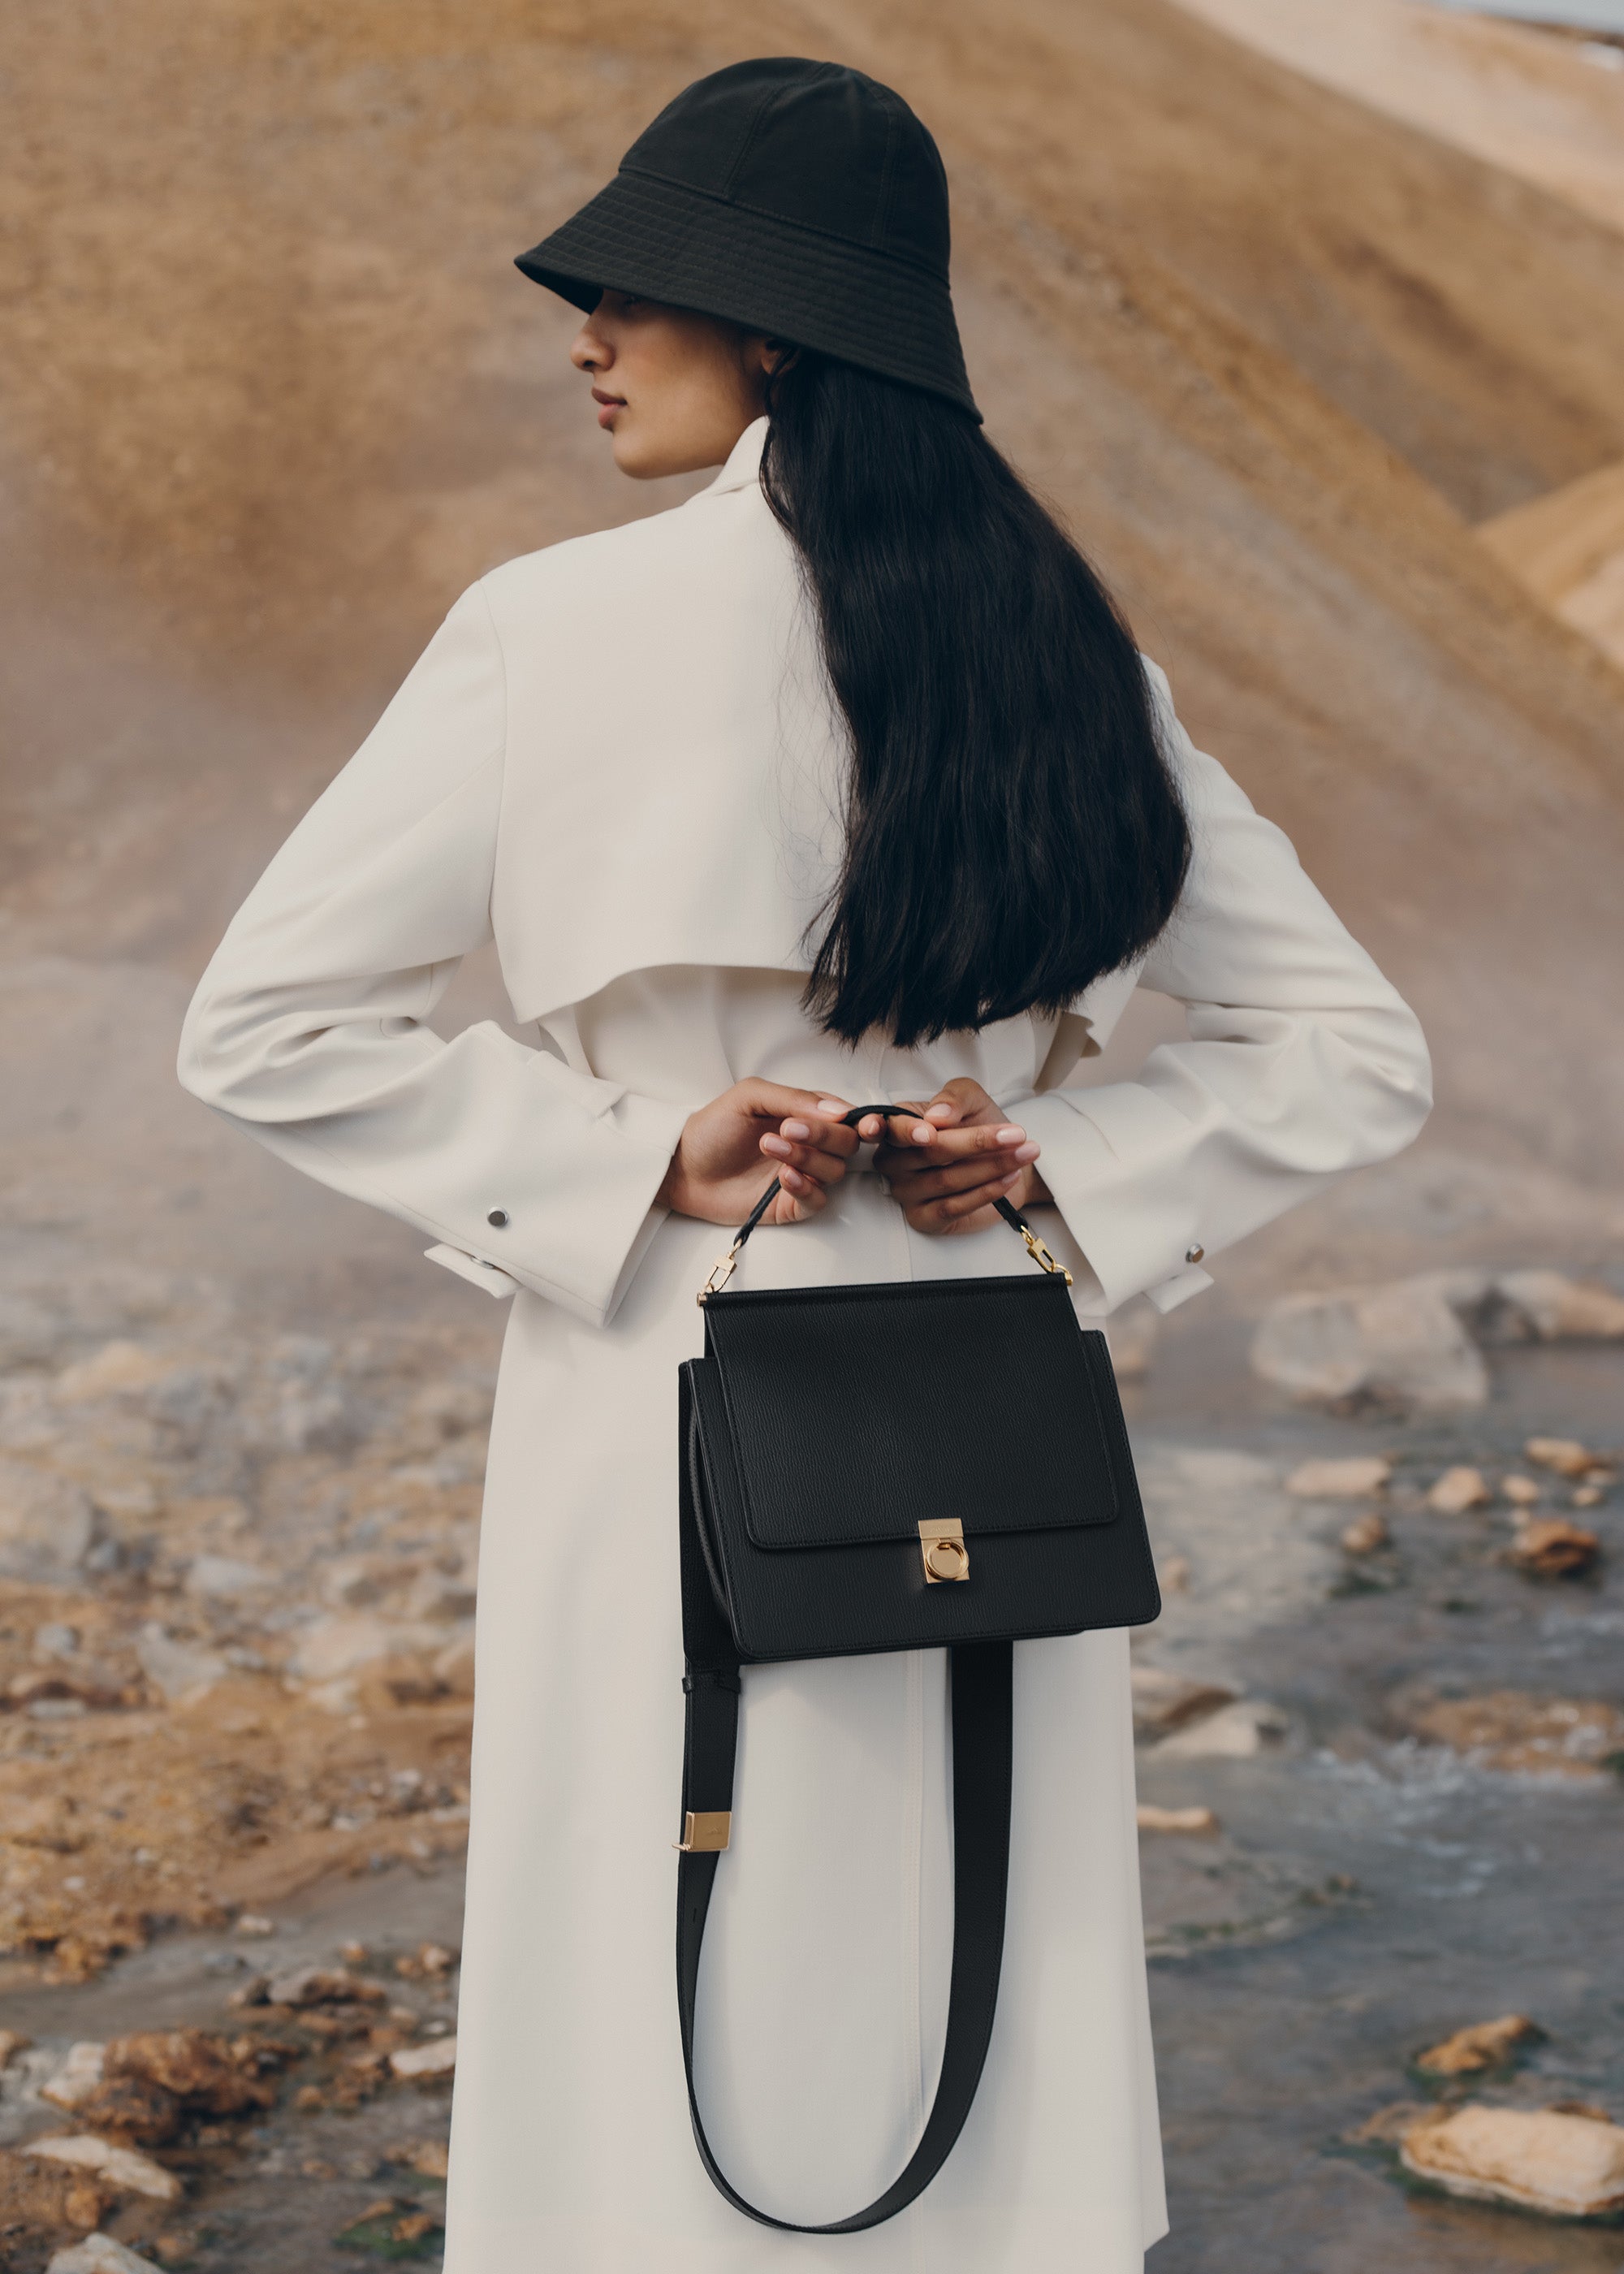 Celine box bag - grey coat - fashion outfit - minimal